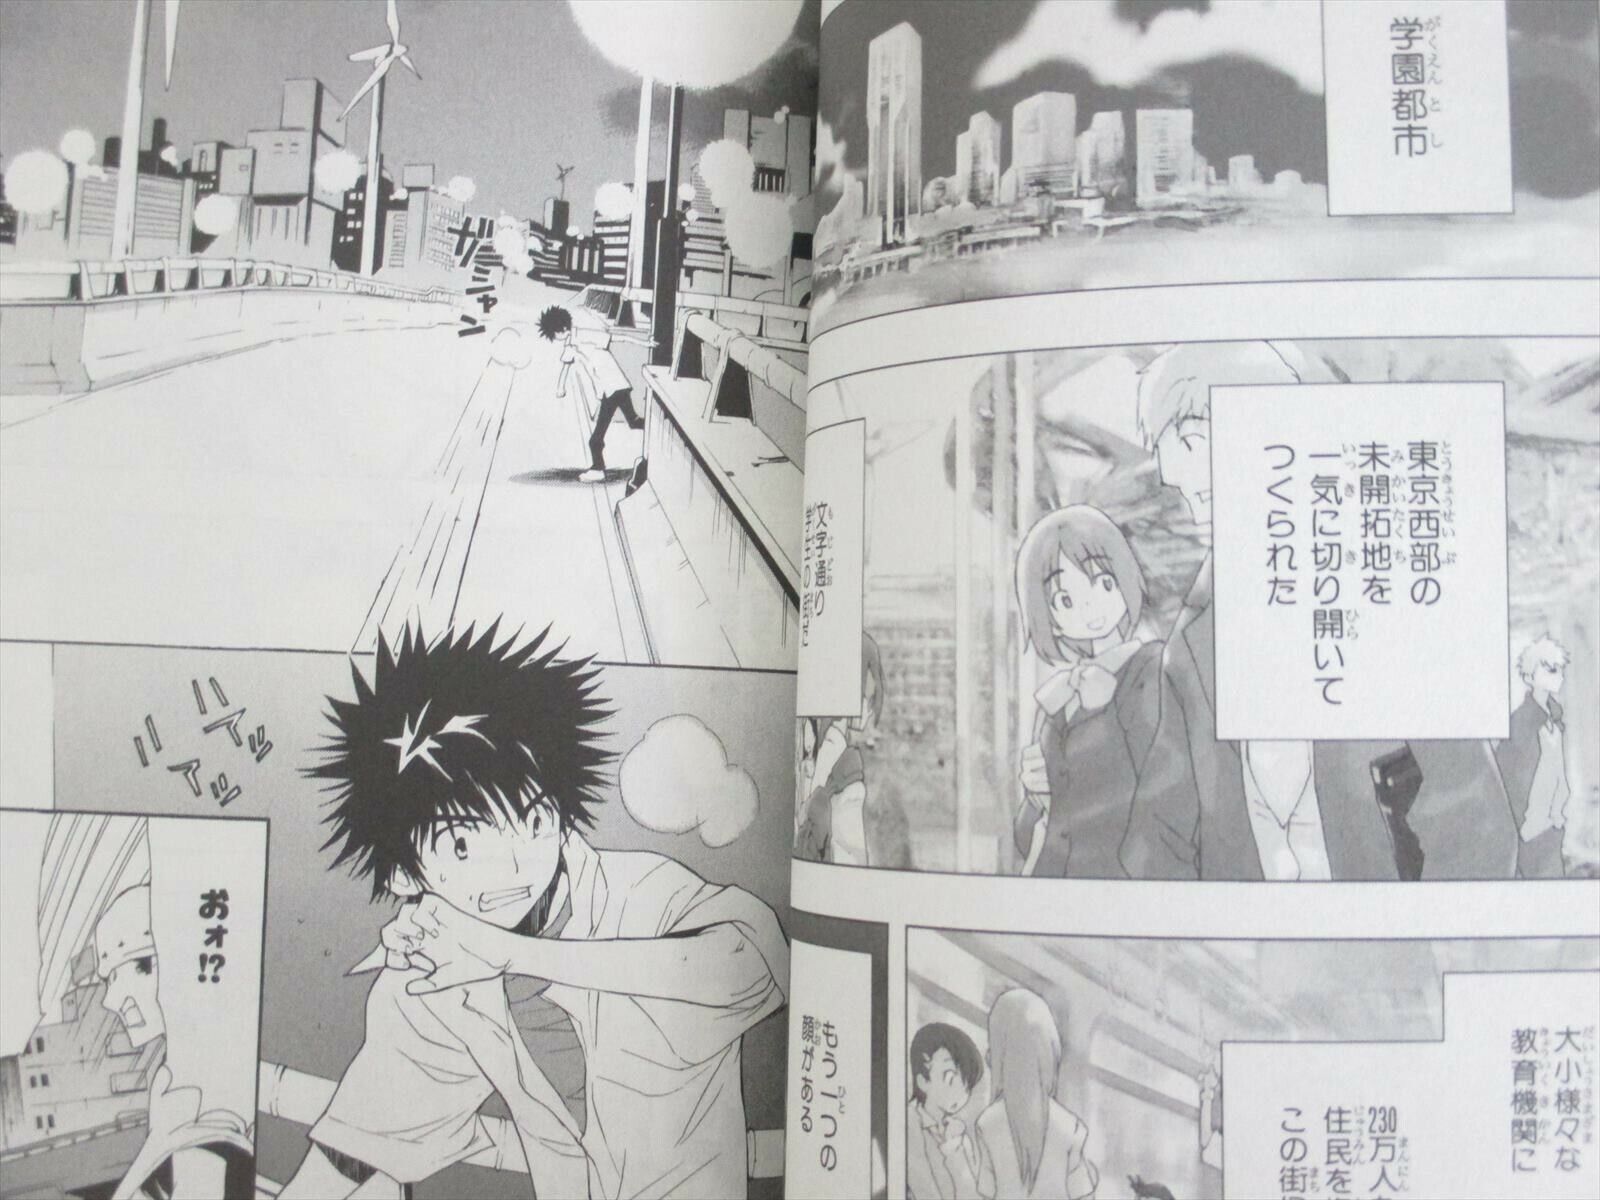 TOARU MAJUTSU NO INDEX Certain Magical Manga Comic Set 1-23 CHUYA KOGINO  Book SE